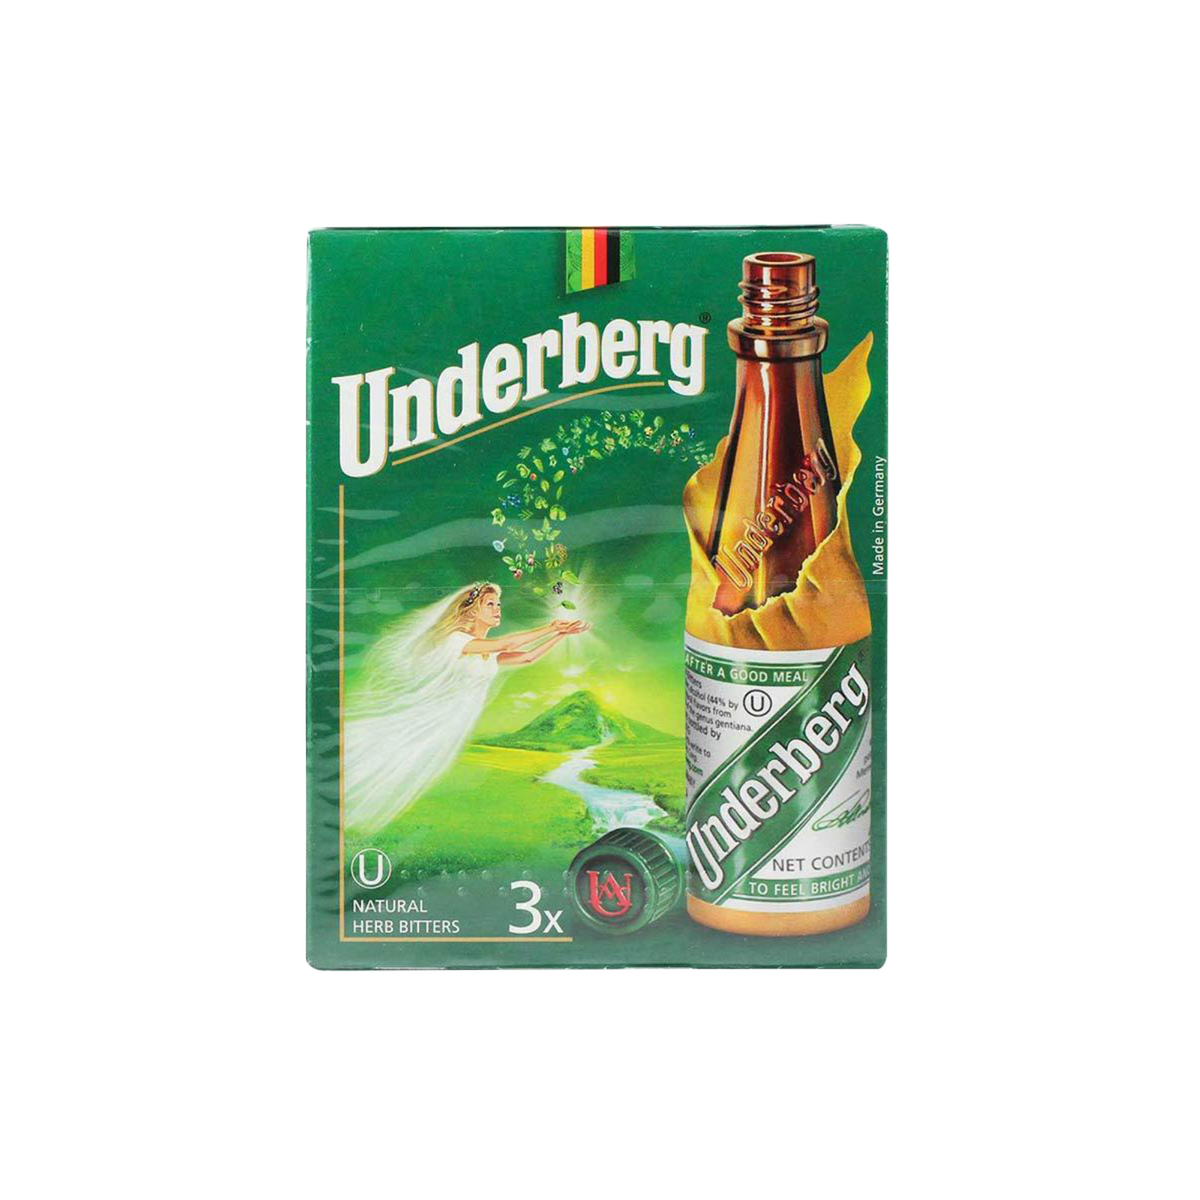 Primary Image of Underberg Natural Herb Bitters (3 bottles)